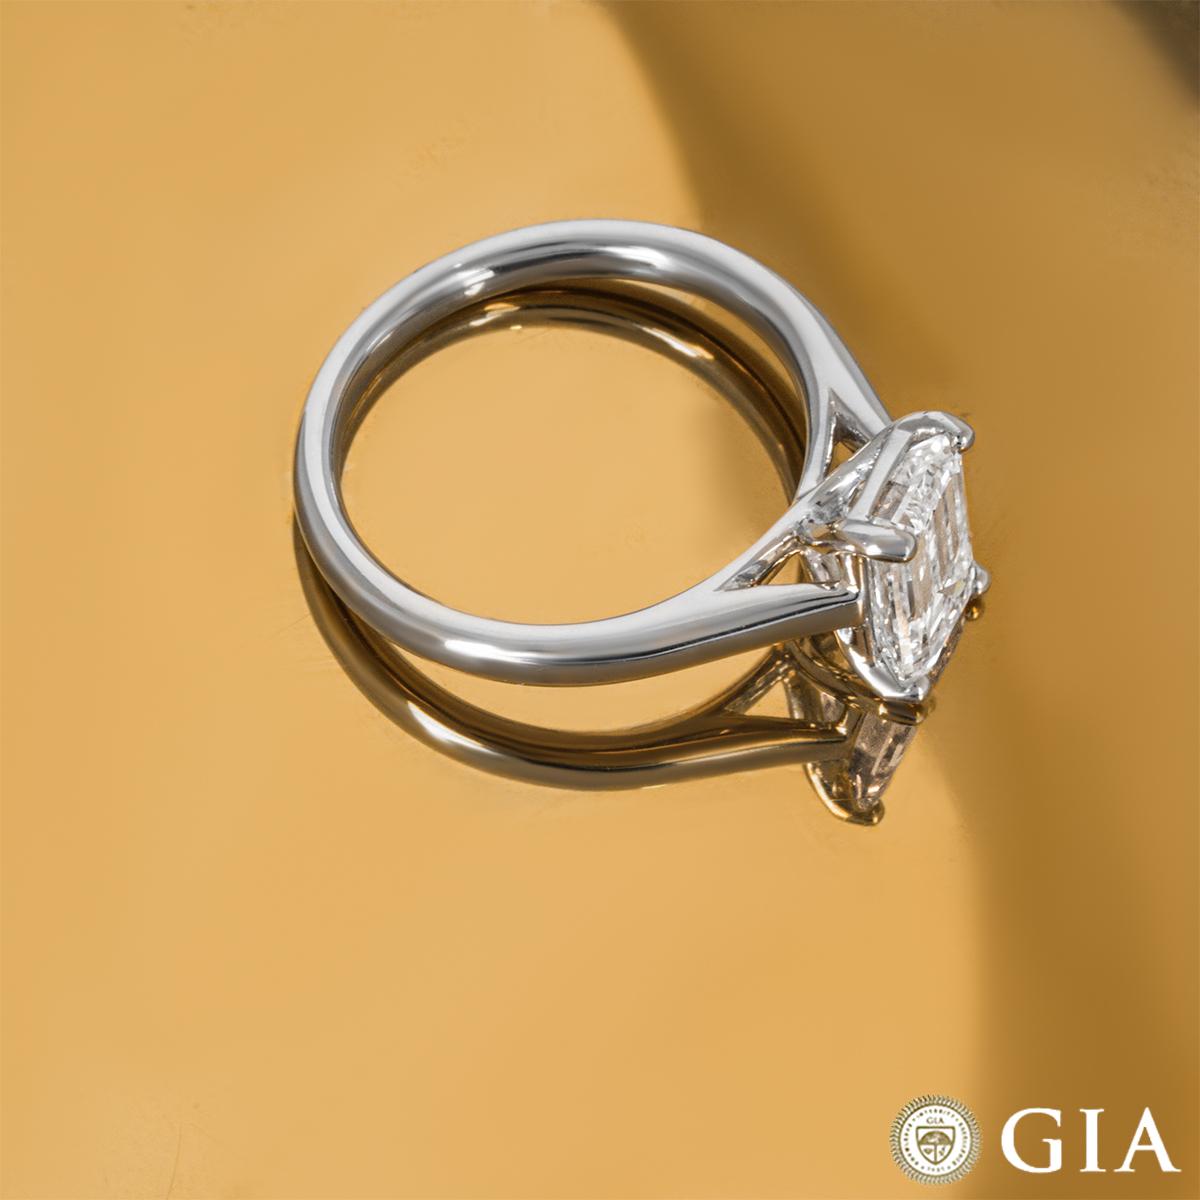 GIA Certified Platinum Emerald Cut Diamond Ring 2.01 Carat F/VS1 For Sale 4